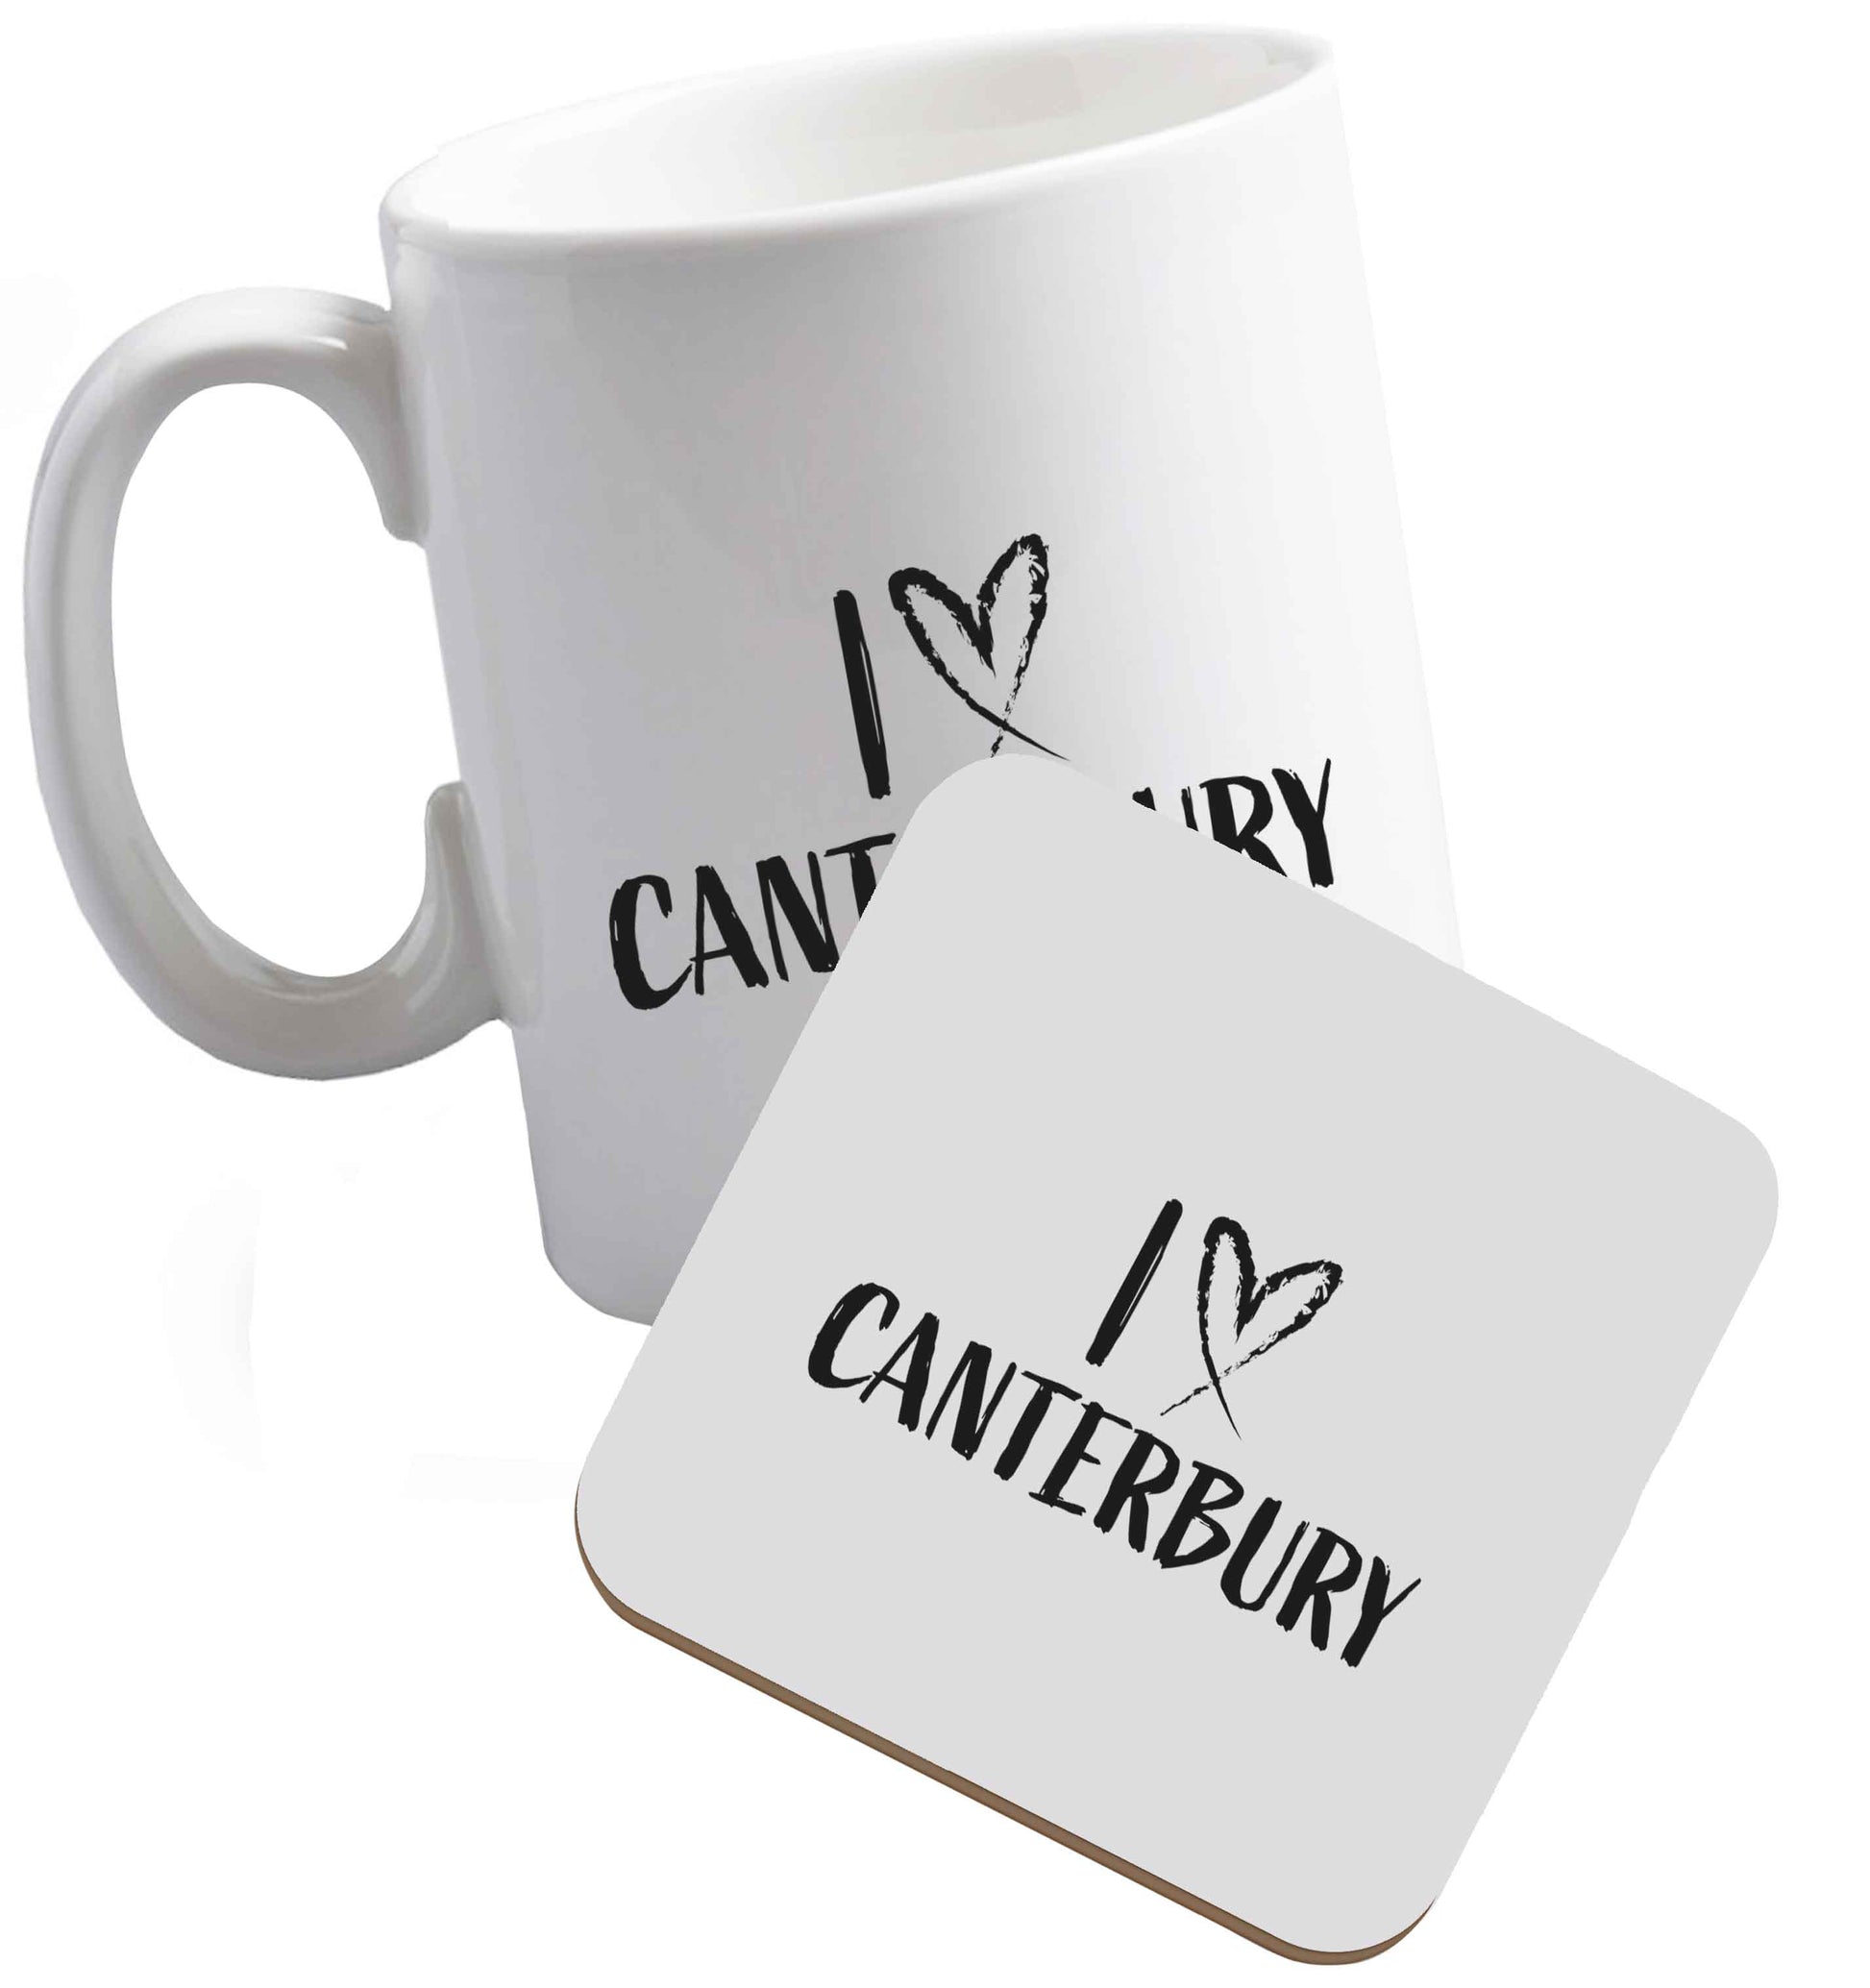 10 oz I love Canterbury ceramic mug and coaster set right handed